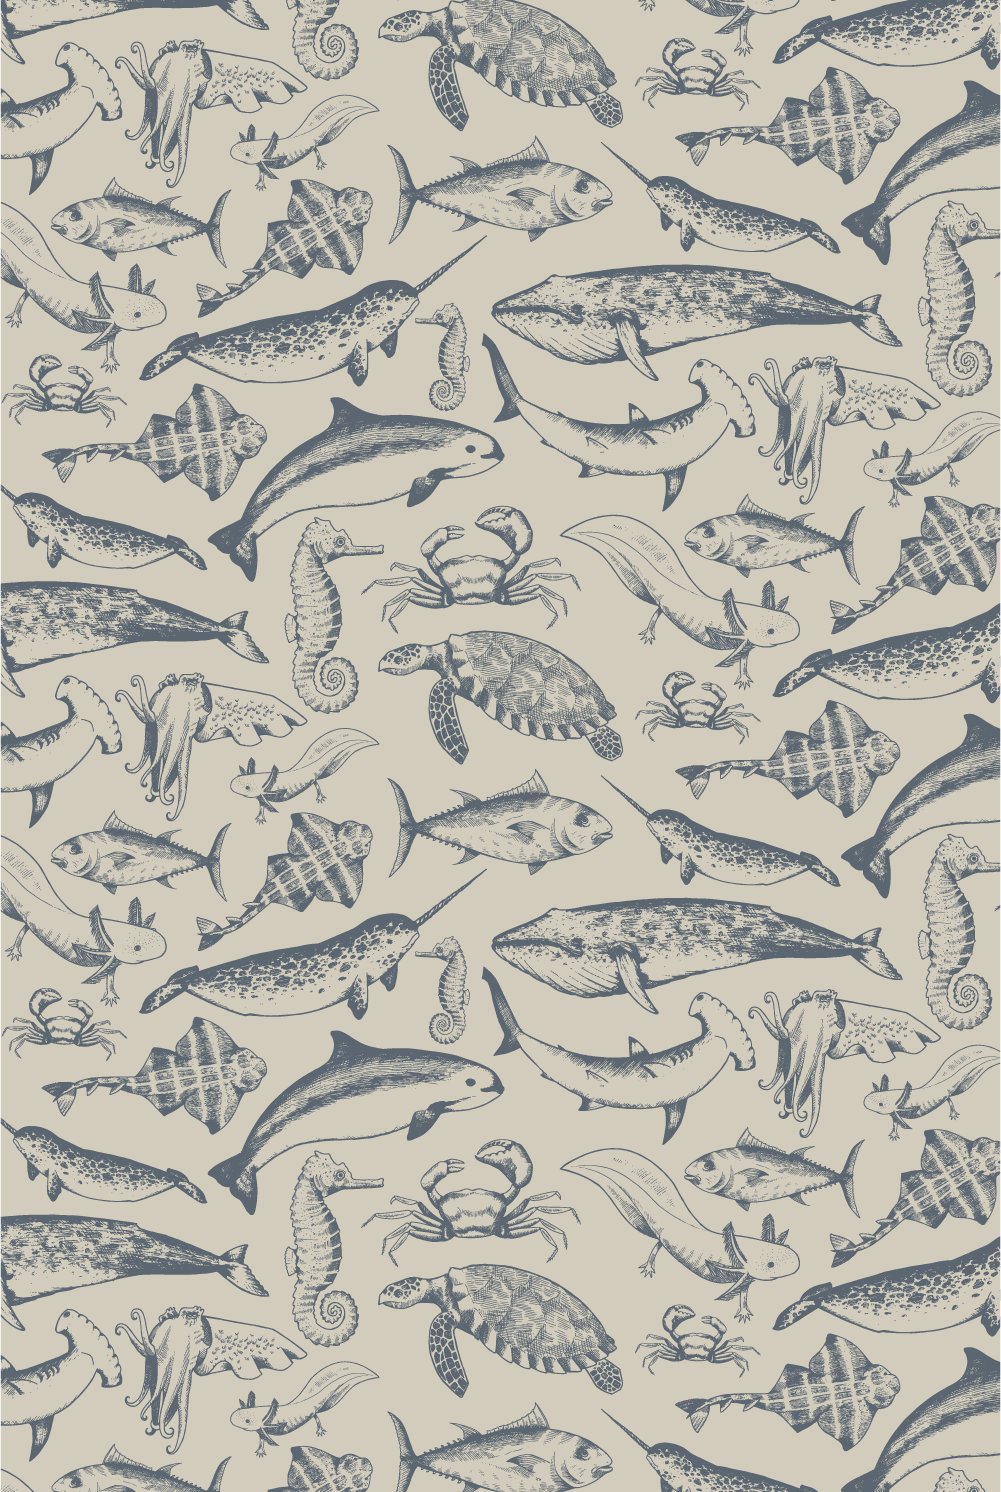 Pattern design by Sophie Leven of eleven endangered sea animal species. Digital illustrations consist of charcoal blue linework on a beige background.